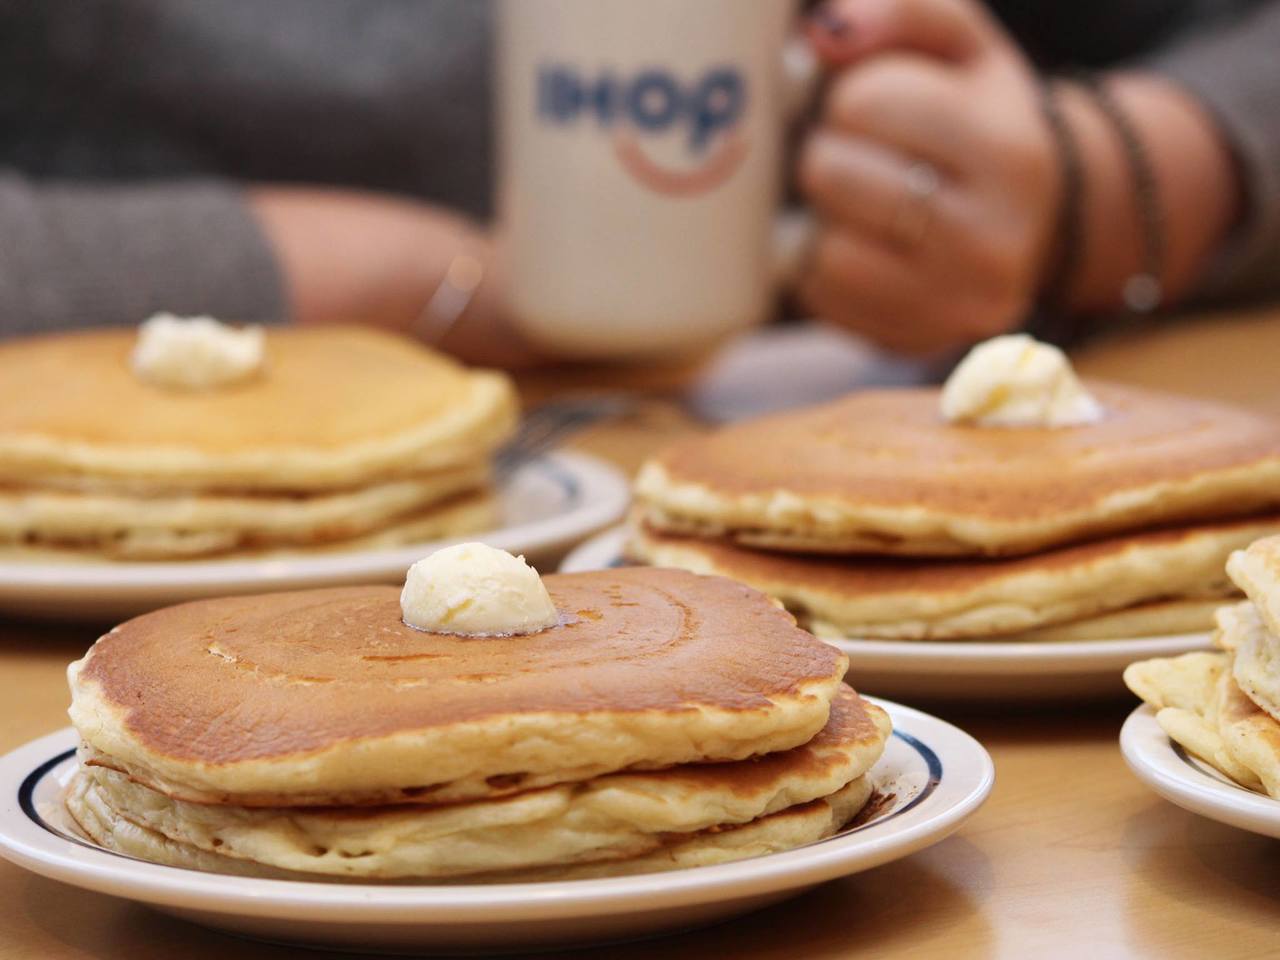 IHOP – International House of Pancakes